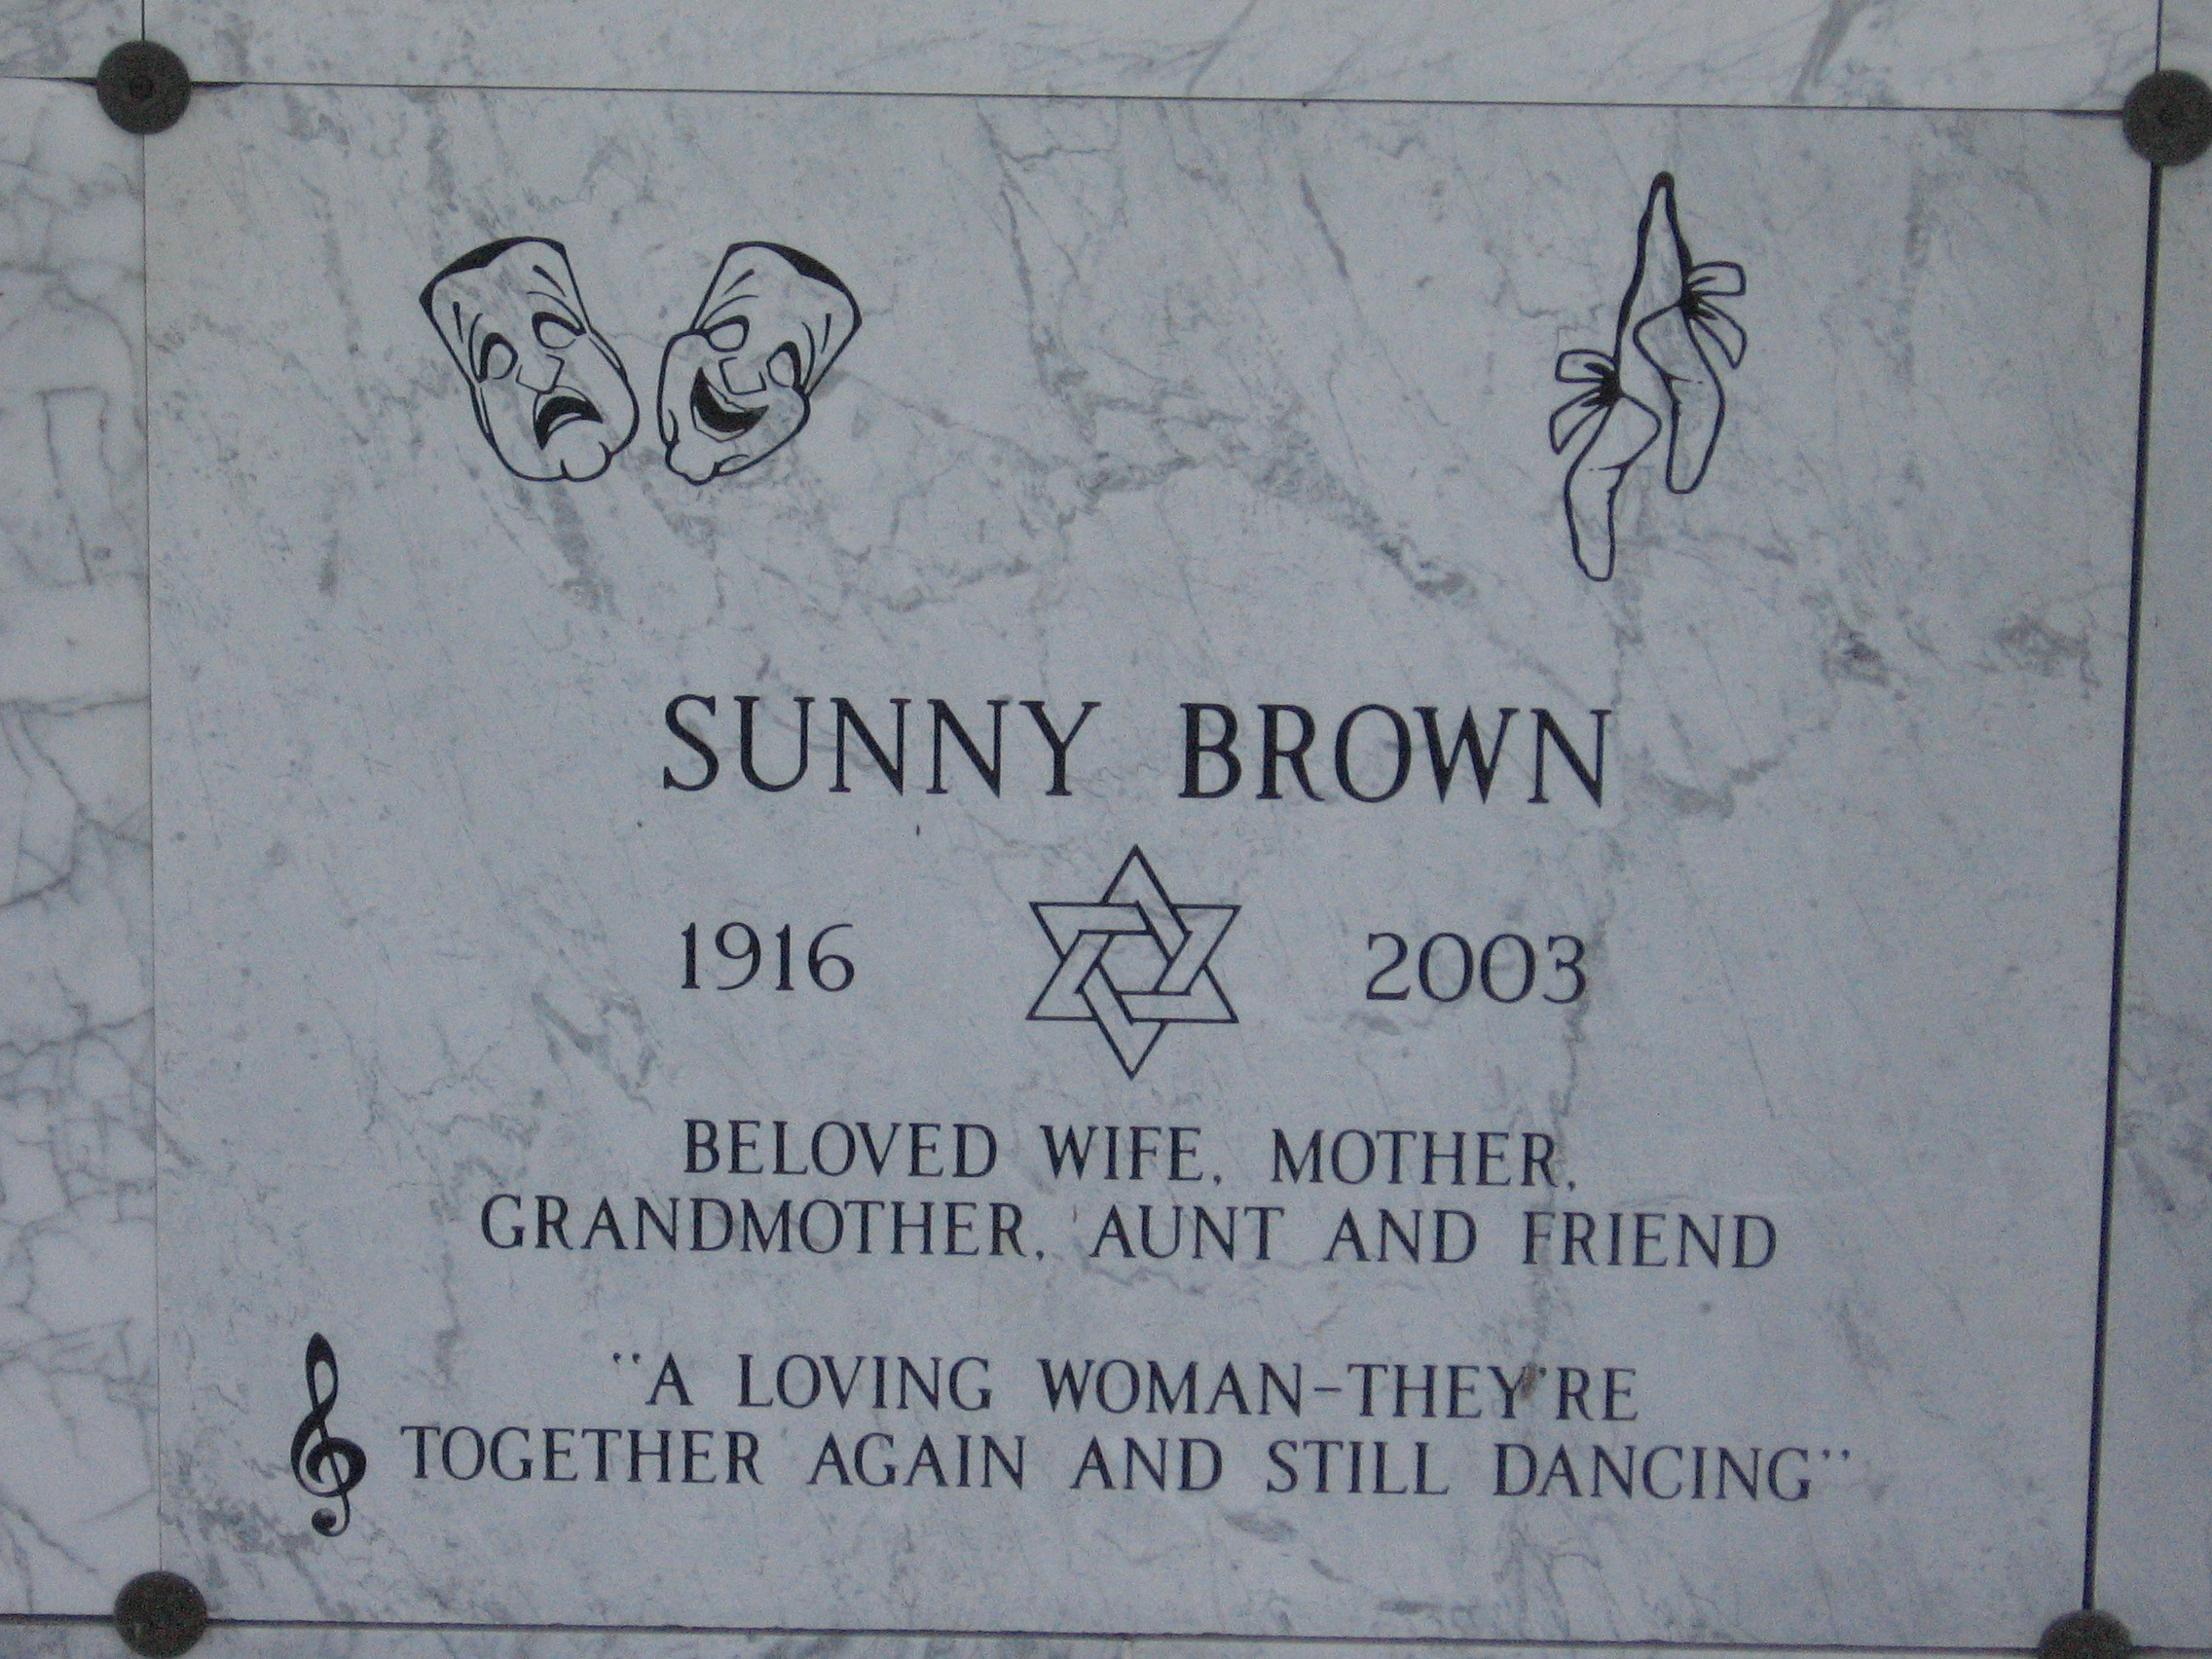 Sunny Brown